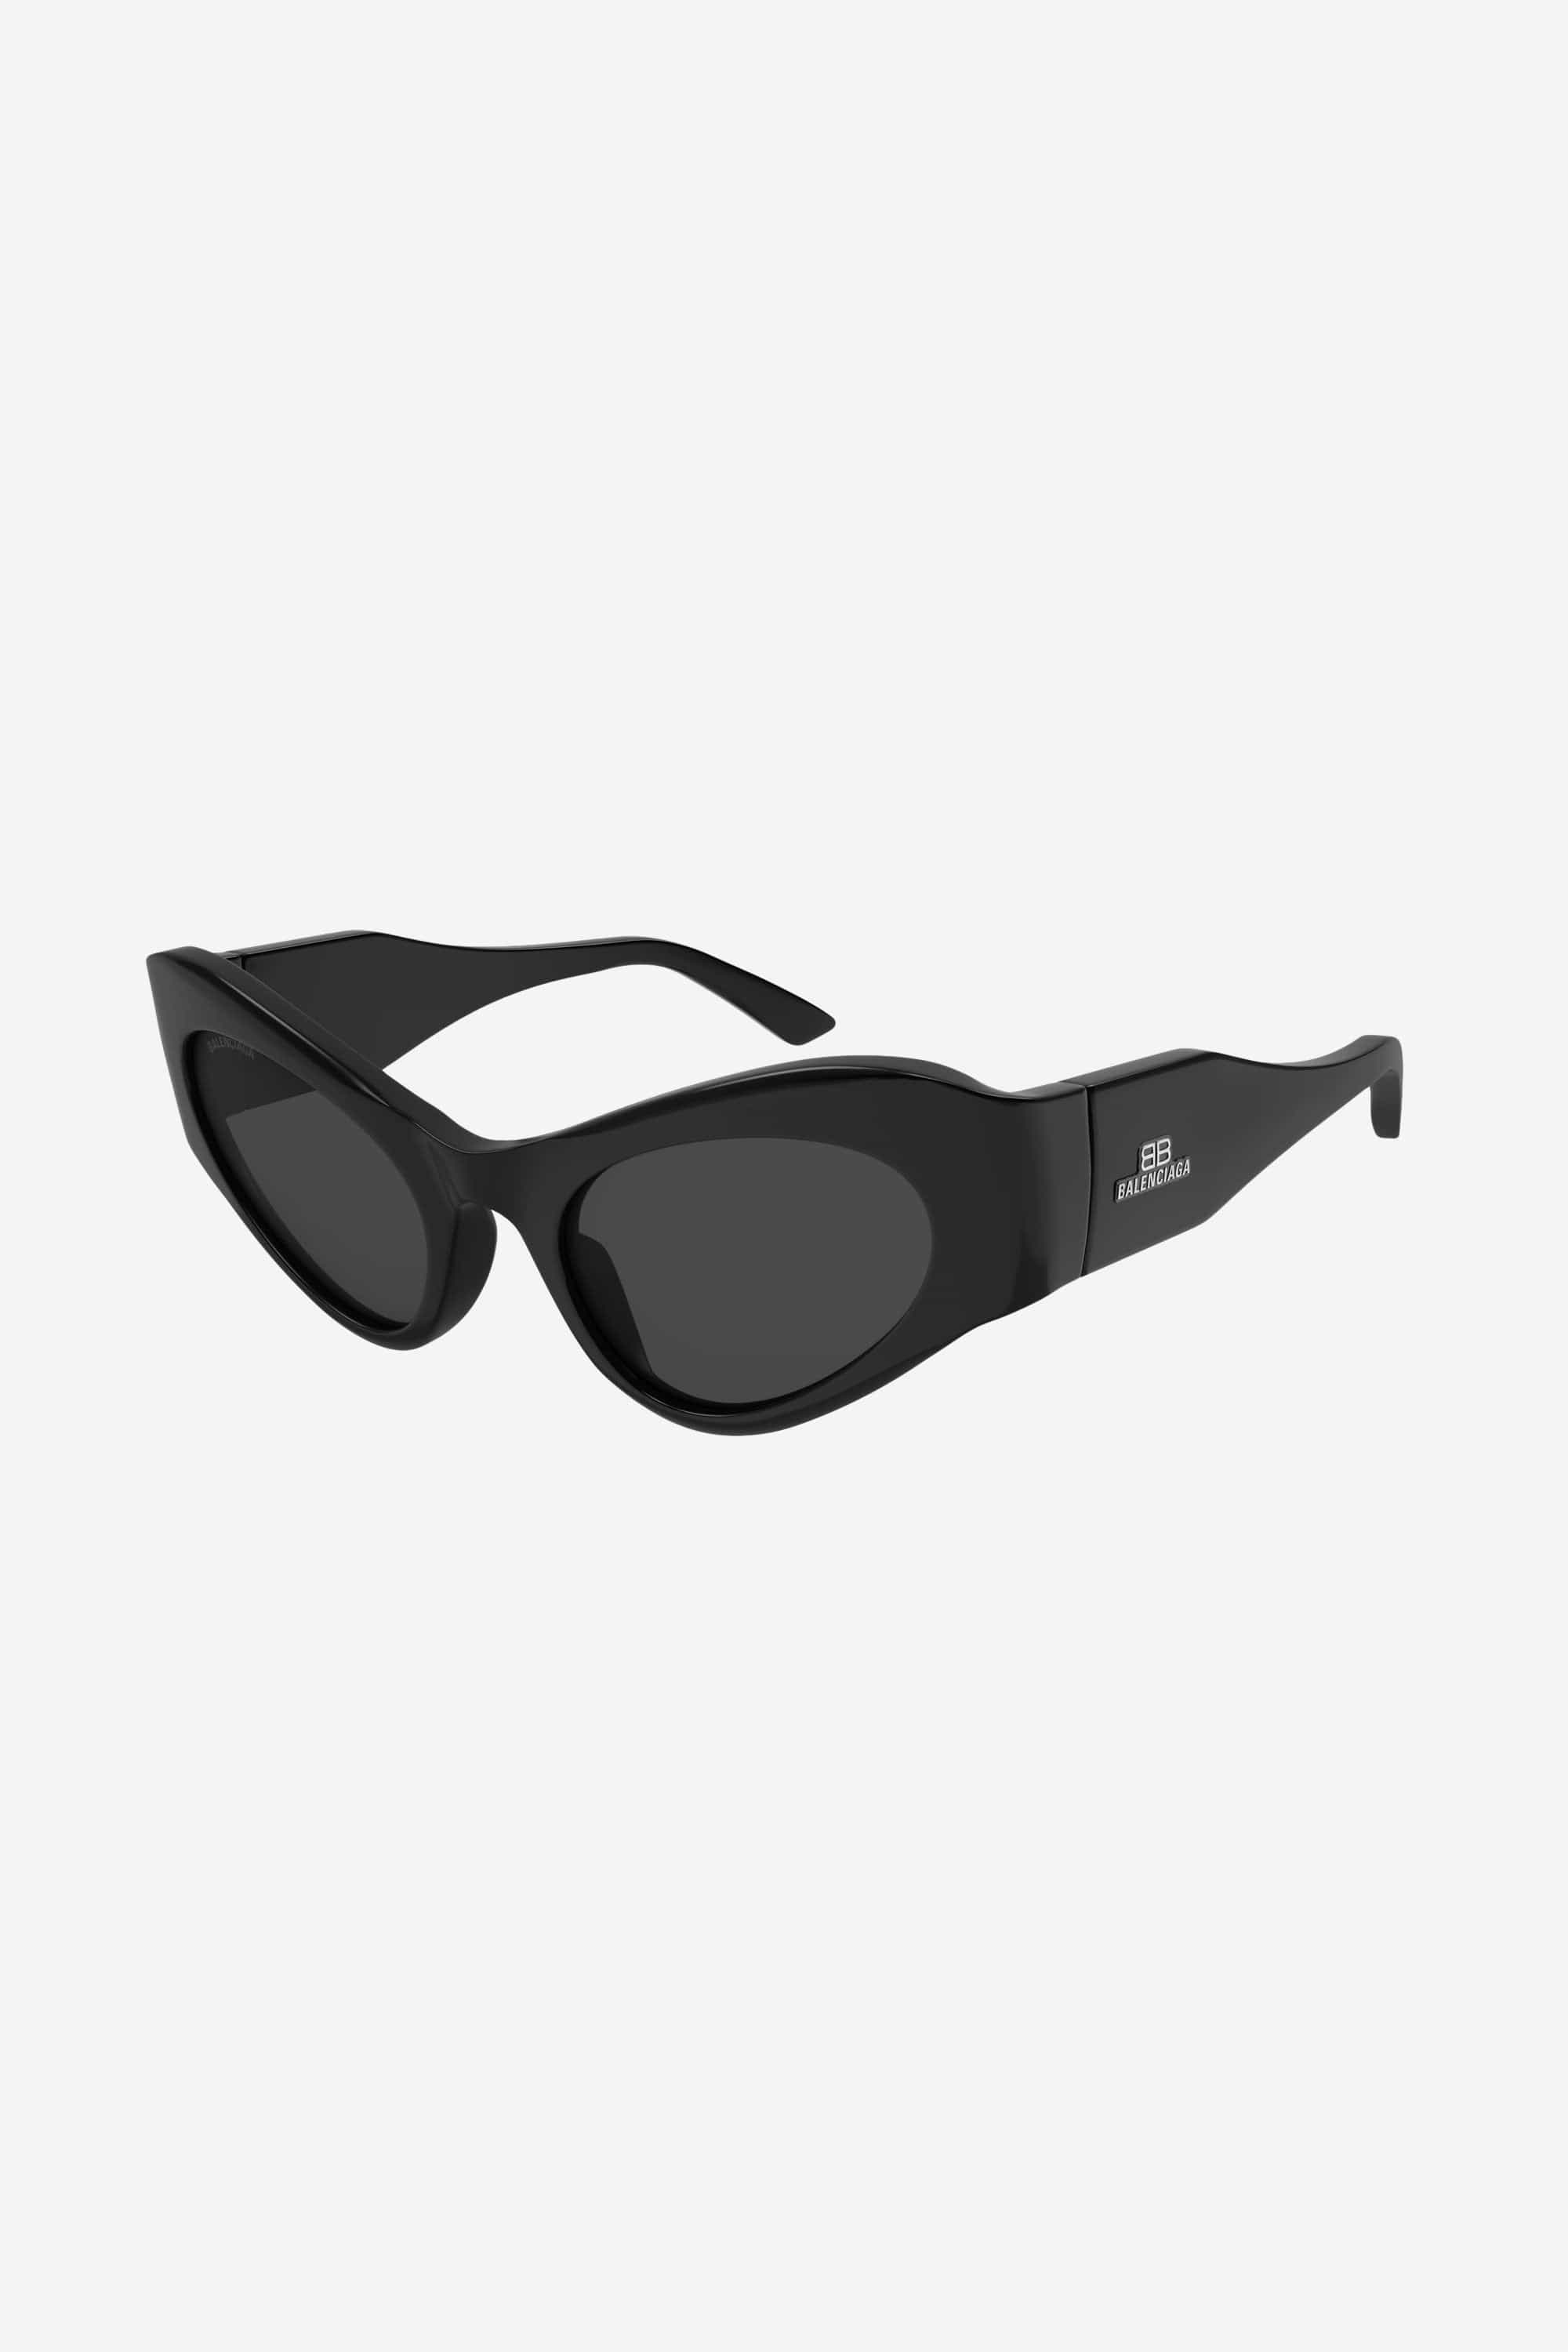 Balenciaga cat butterfly black sunglasses - Eyewear Club